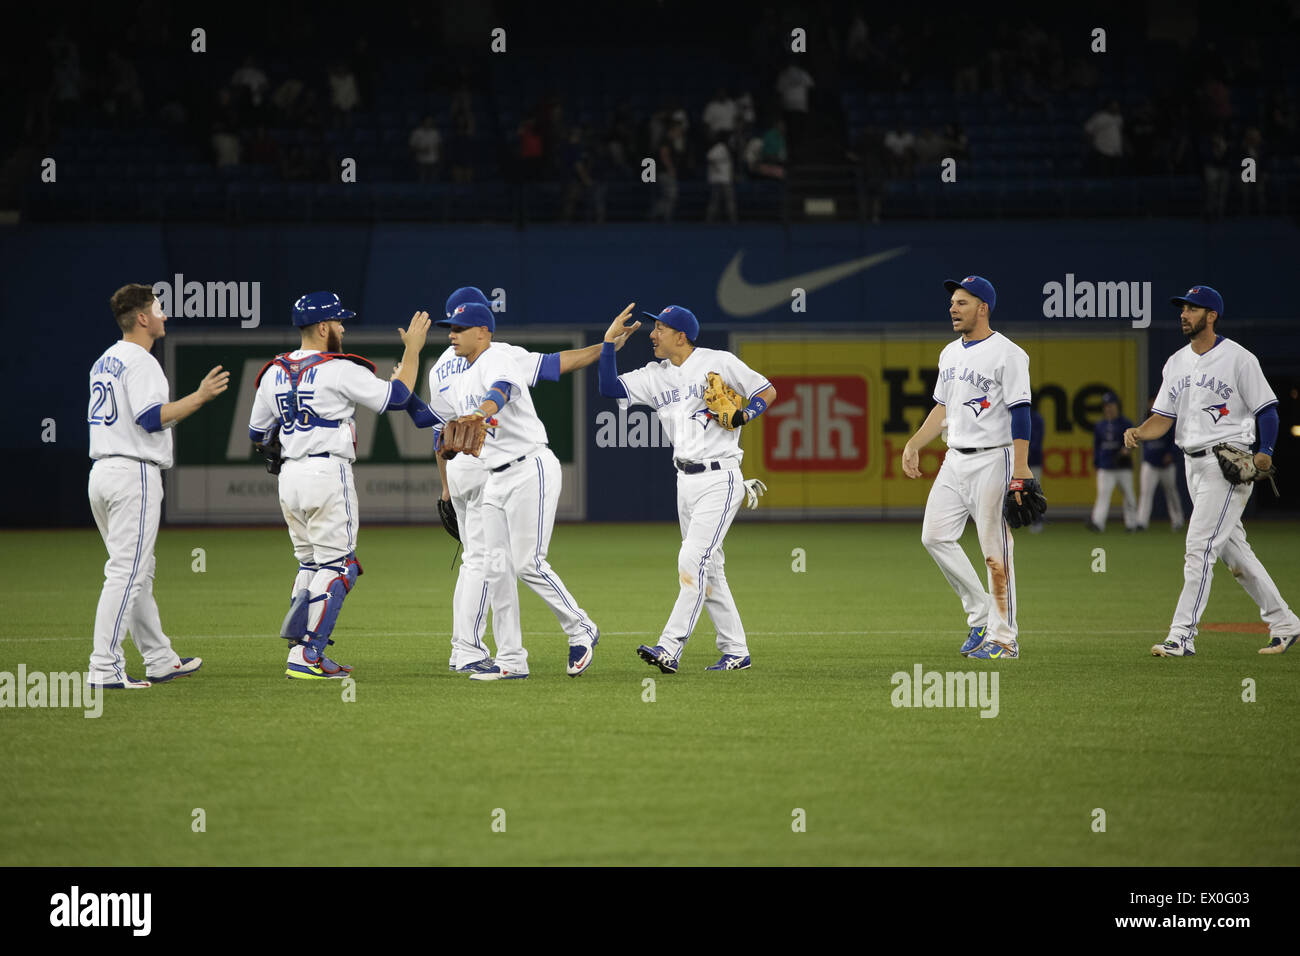 Baseball-Spieler feiern Sieg Blue jays Stockfoto